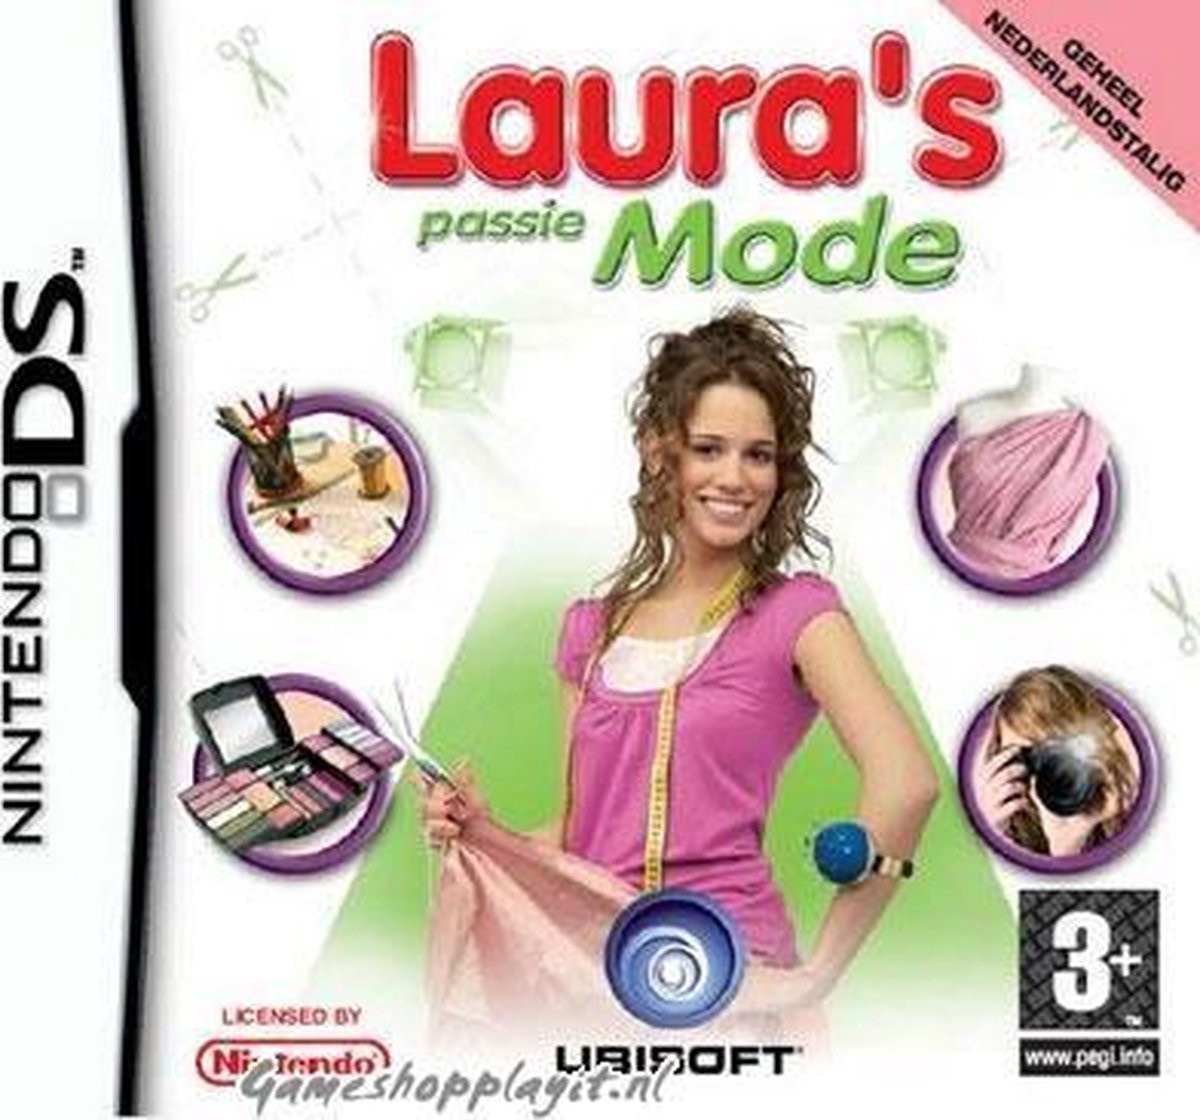 Laura's Passie Mode - Nintendo DS Games